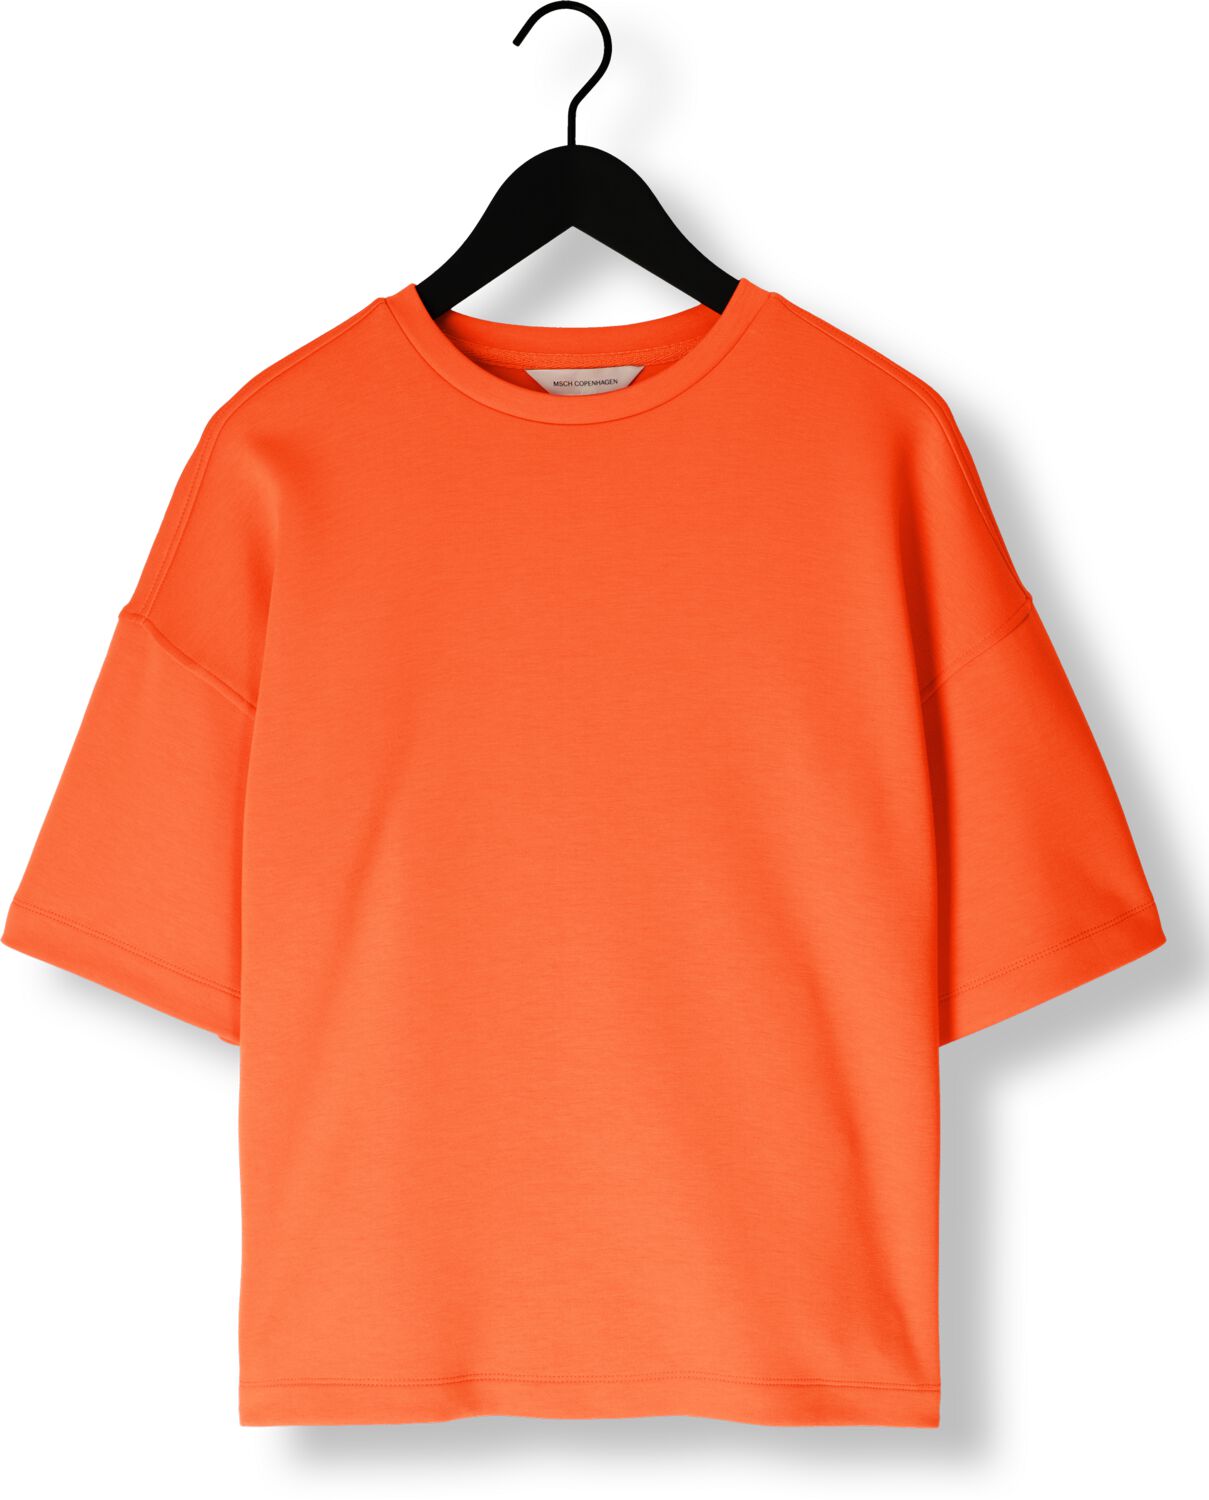 MSCH COPENHAGEN Dames Tops & T-shirts Mschbessia Ima Q 2 4 Sweatshirt Rood